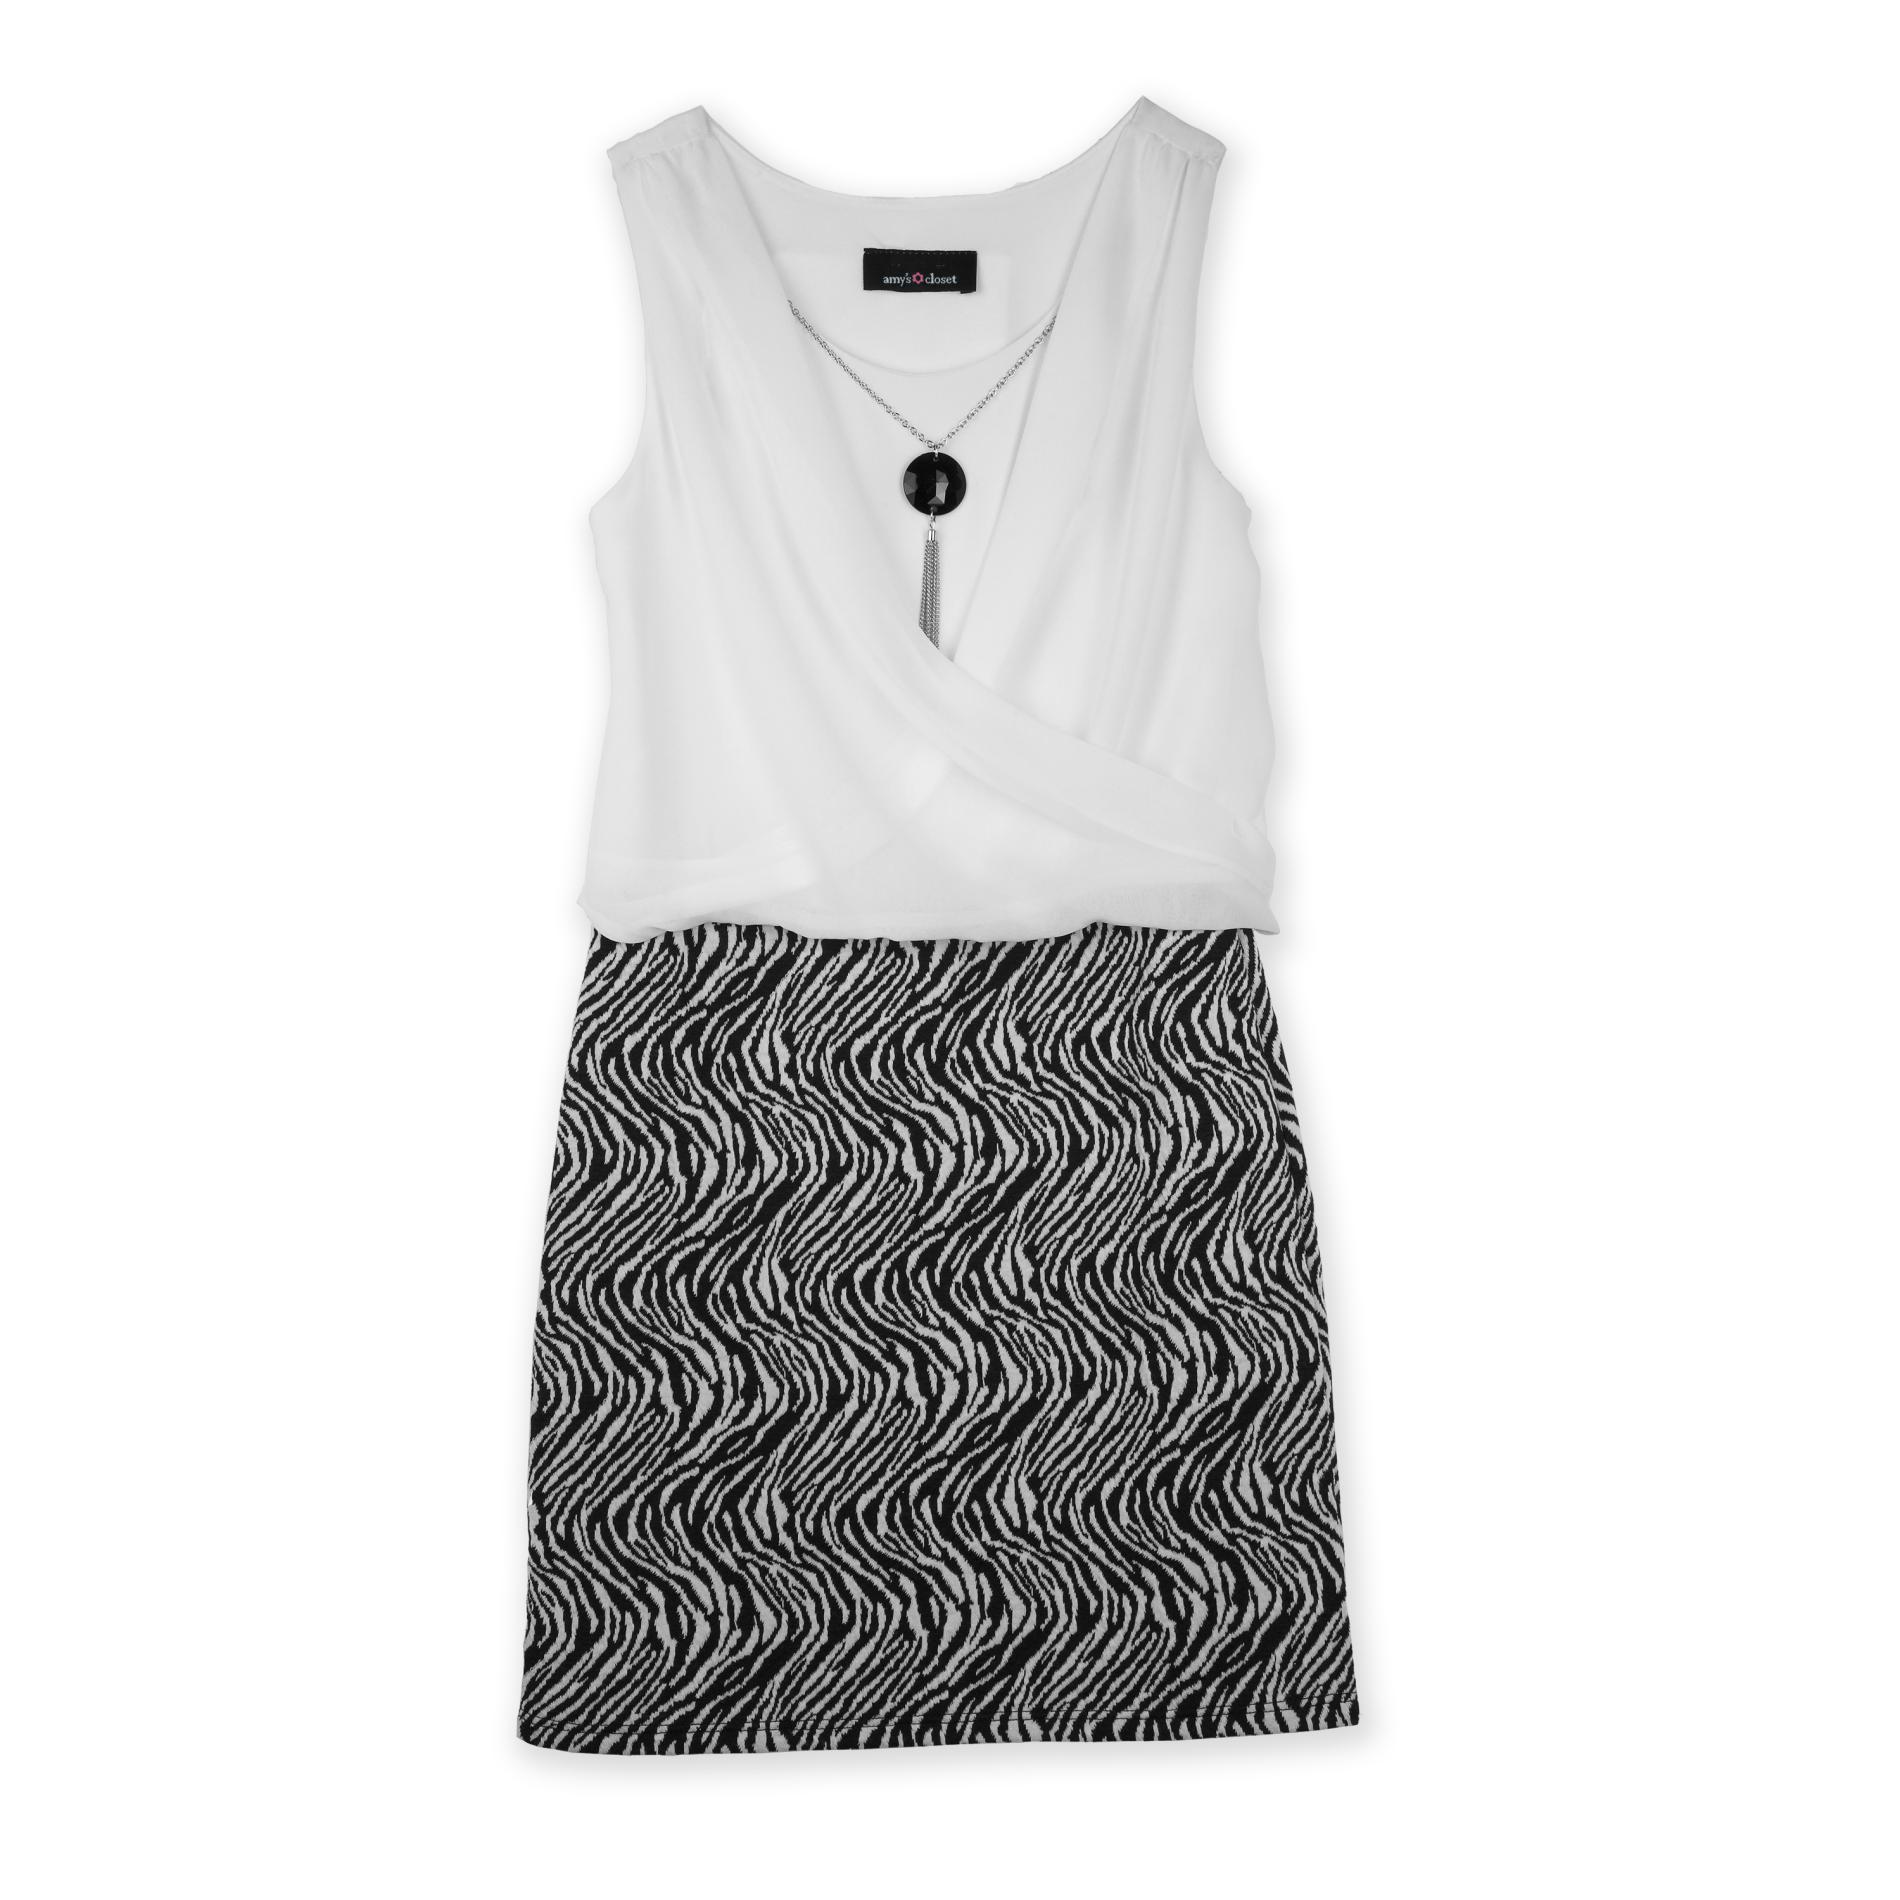 Amy's Closet Girl's Sleeveless Dress & Necklace - Wave Print